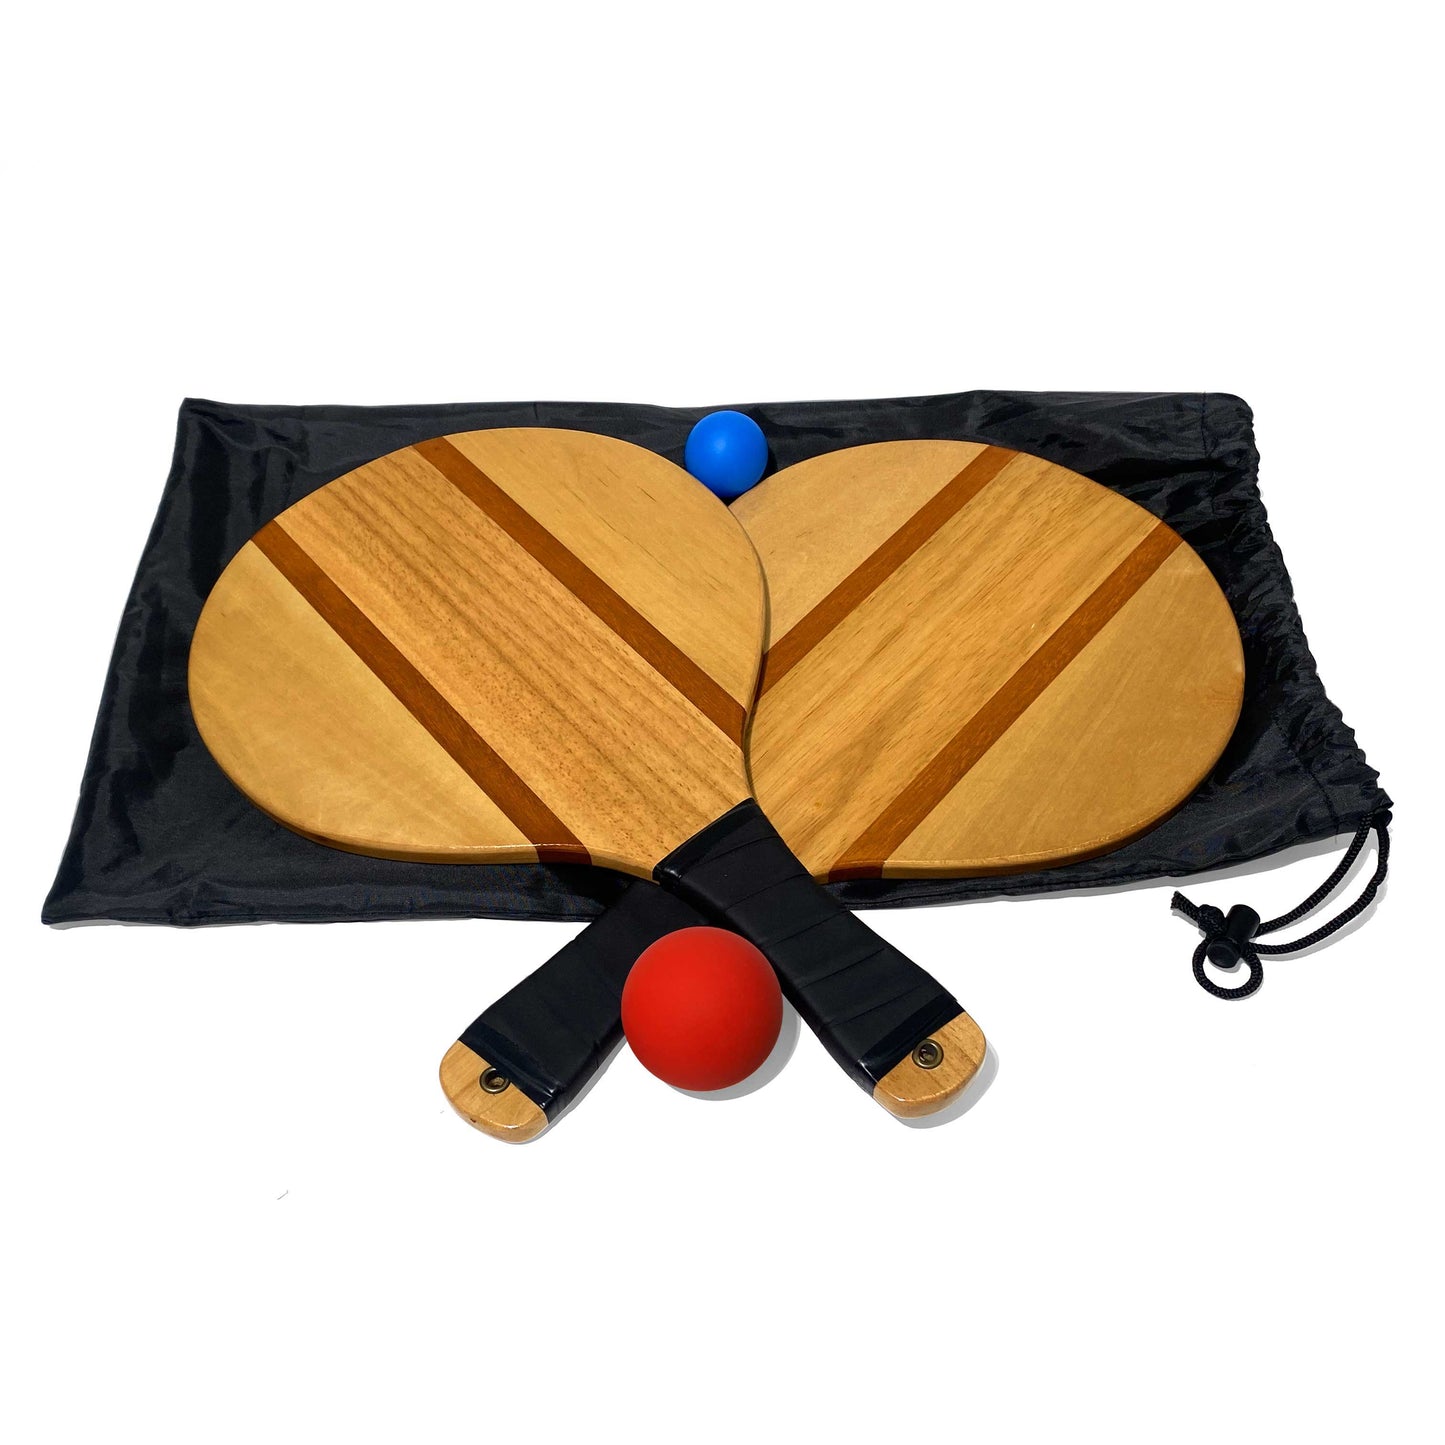 Frescobol Paddle Ball Game